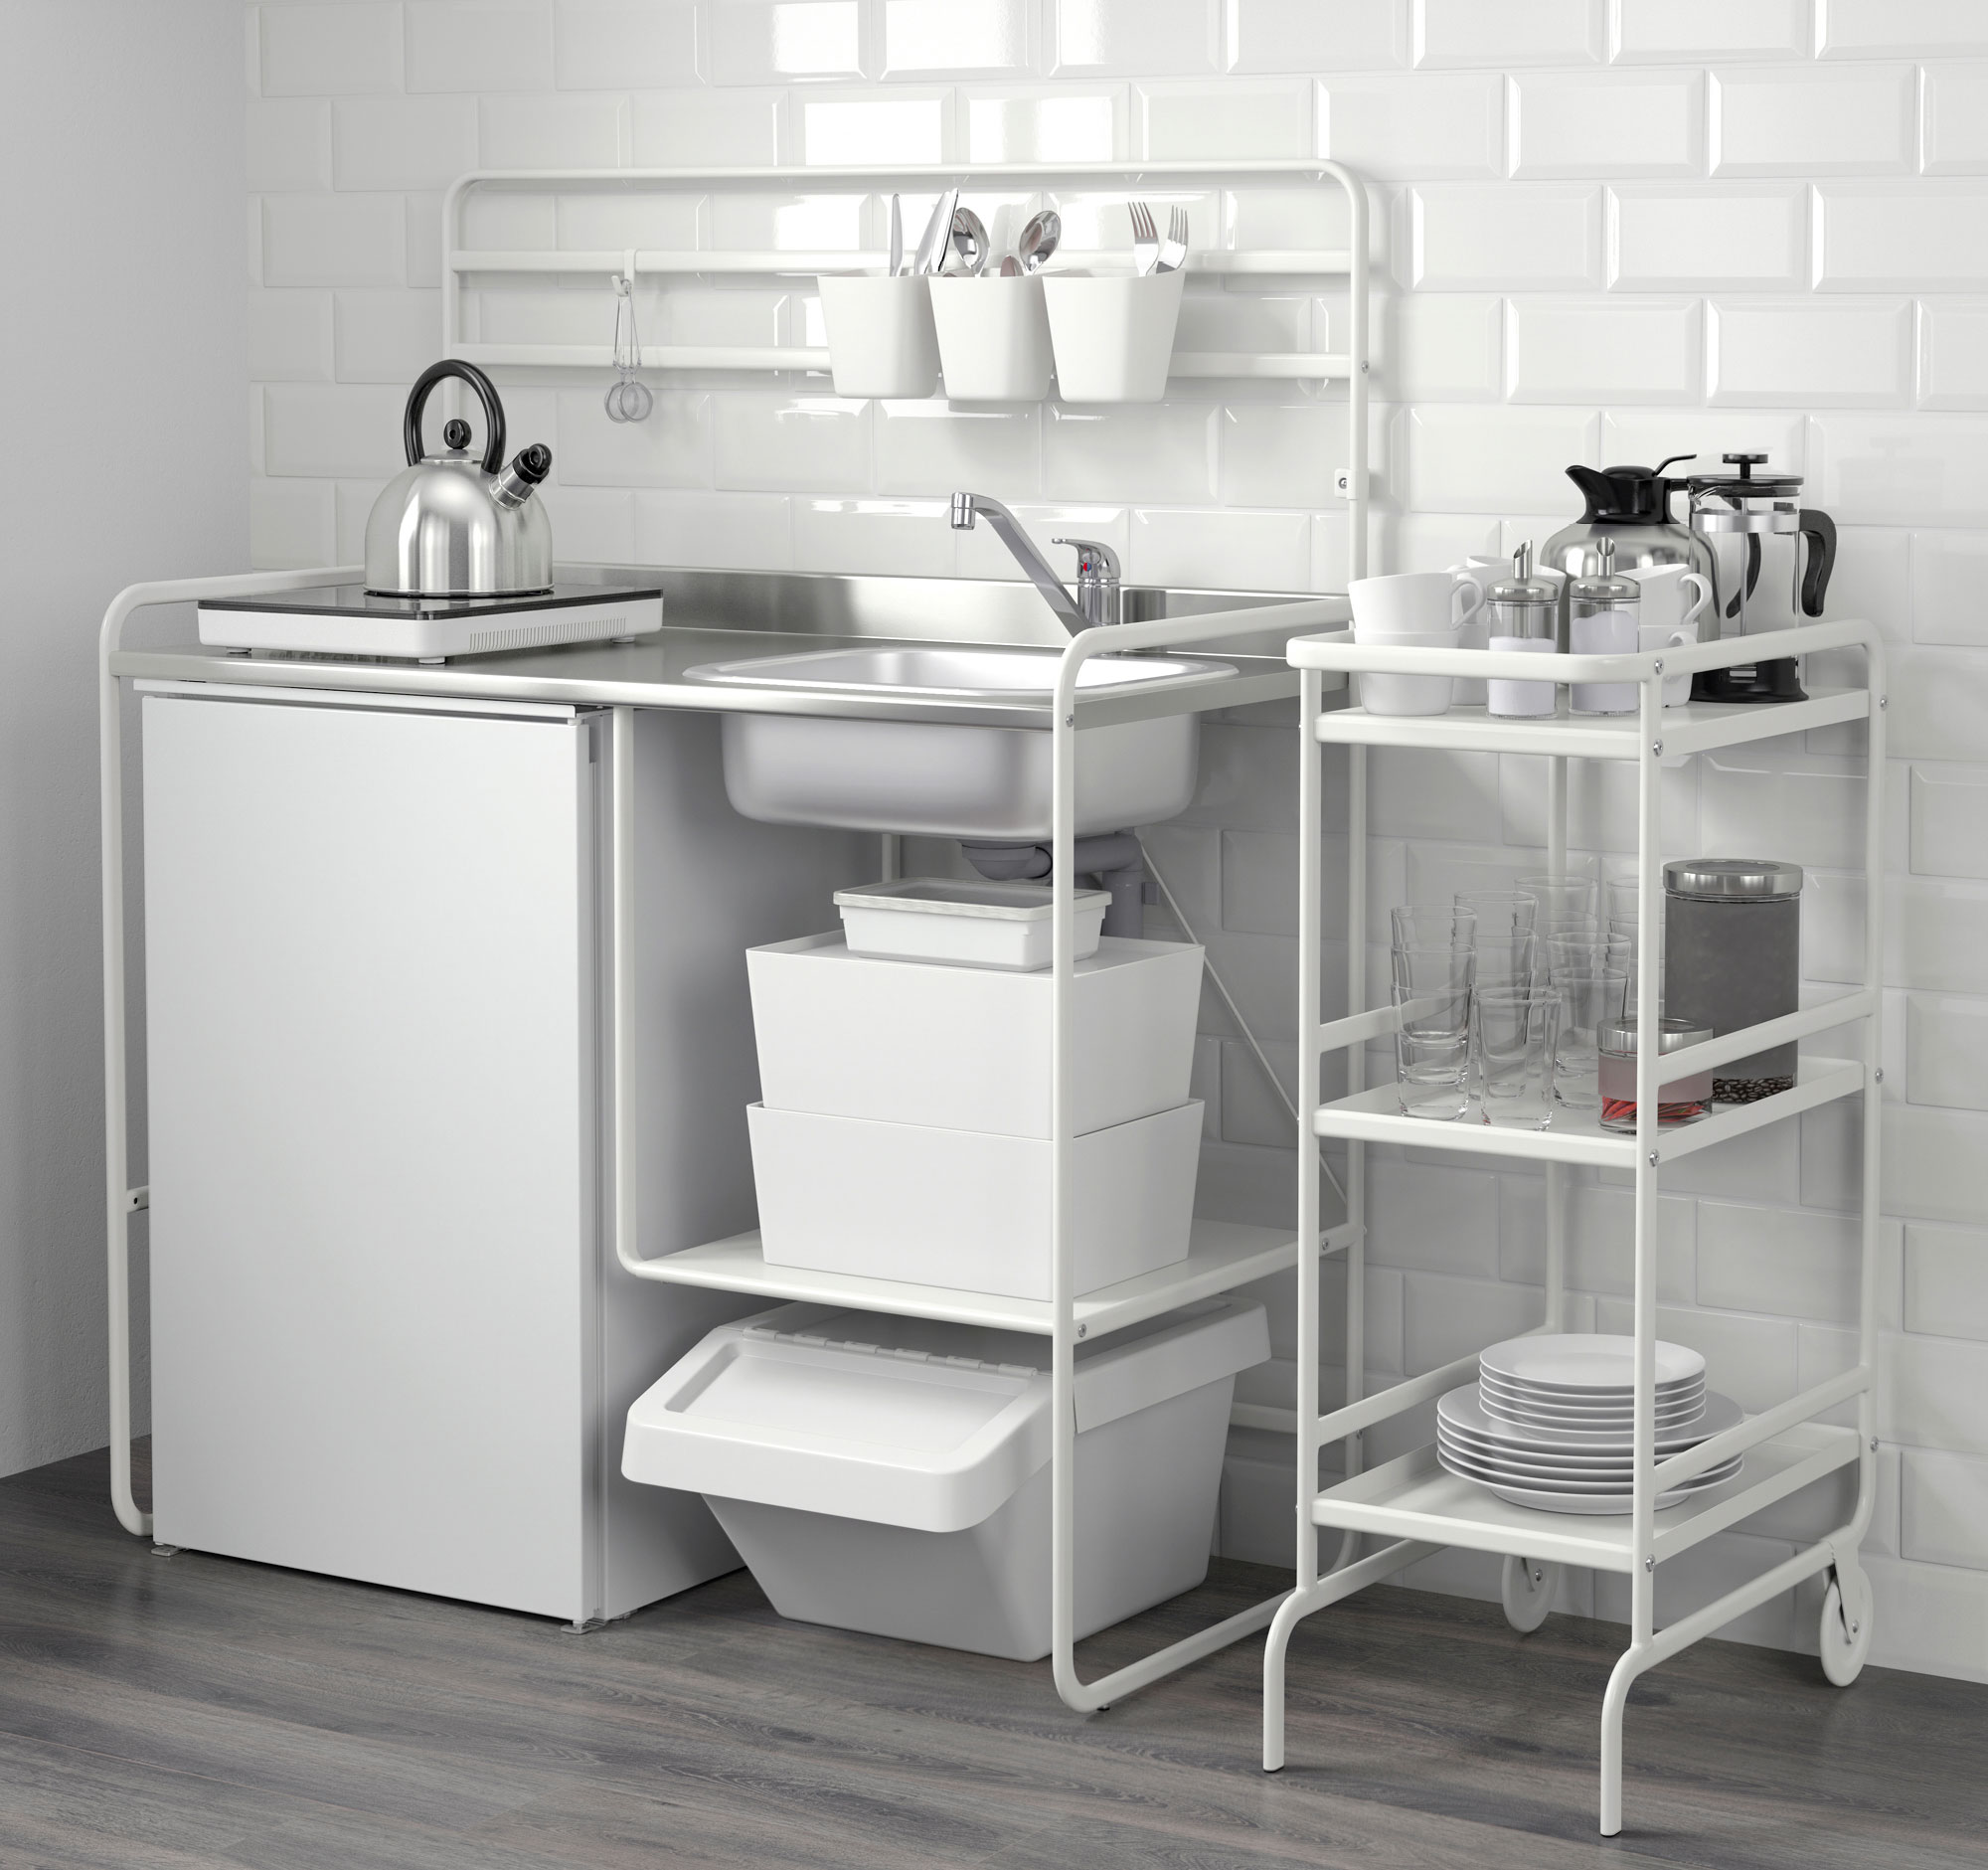 Read about SUNNERSTA mini-kitchen from 2016 - IKEA Museum